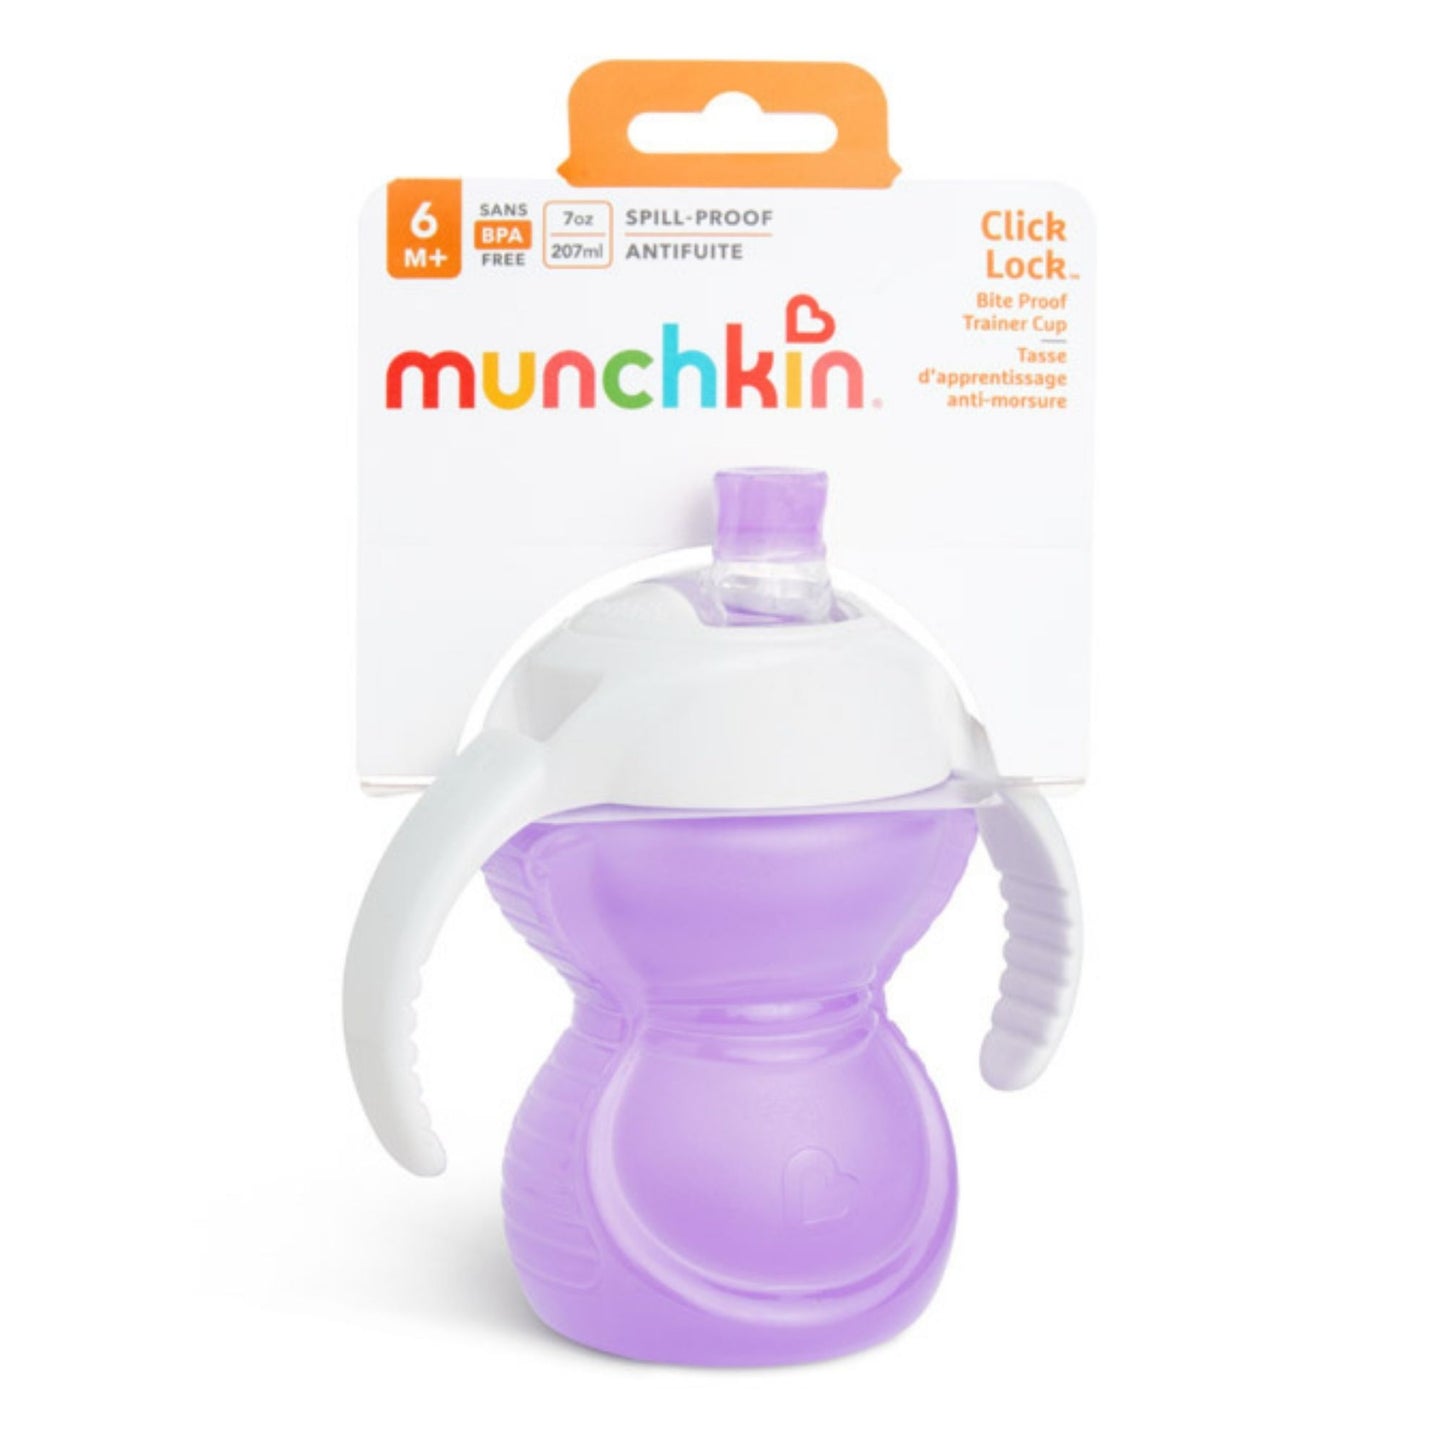 Munchkin Click Lock ™ Bite Proof Trainer Cup - 7oz